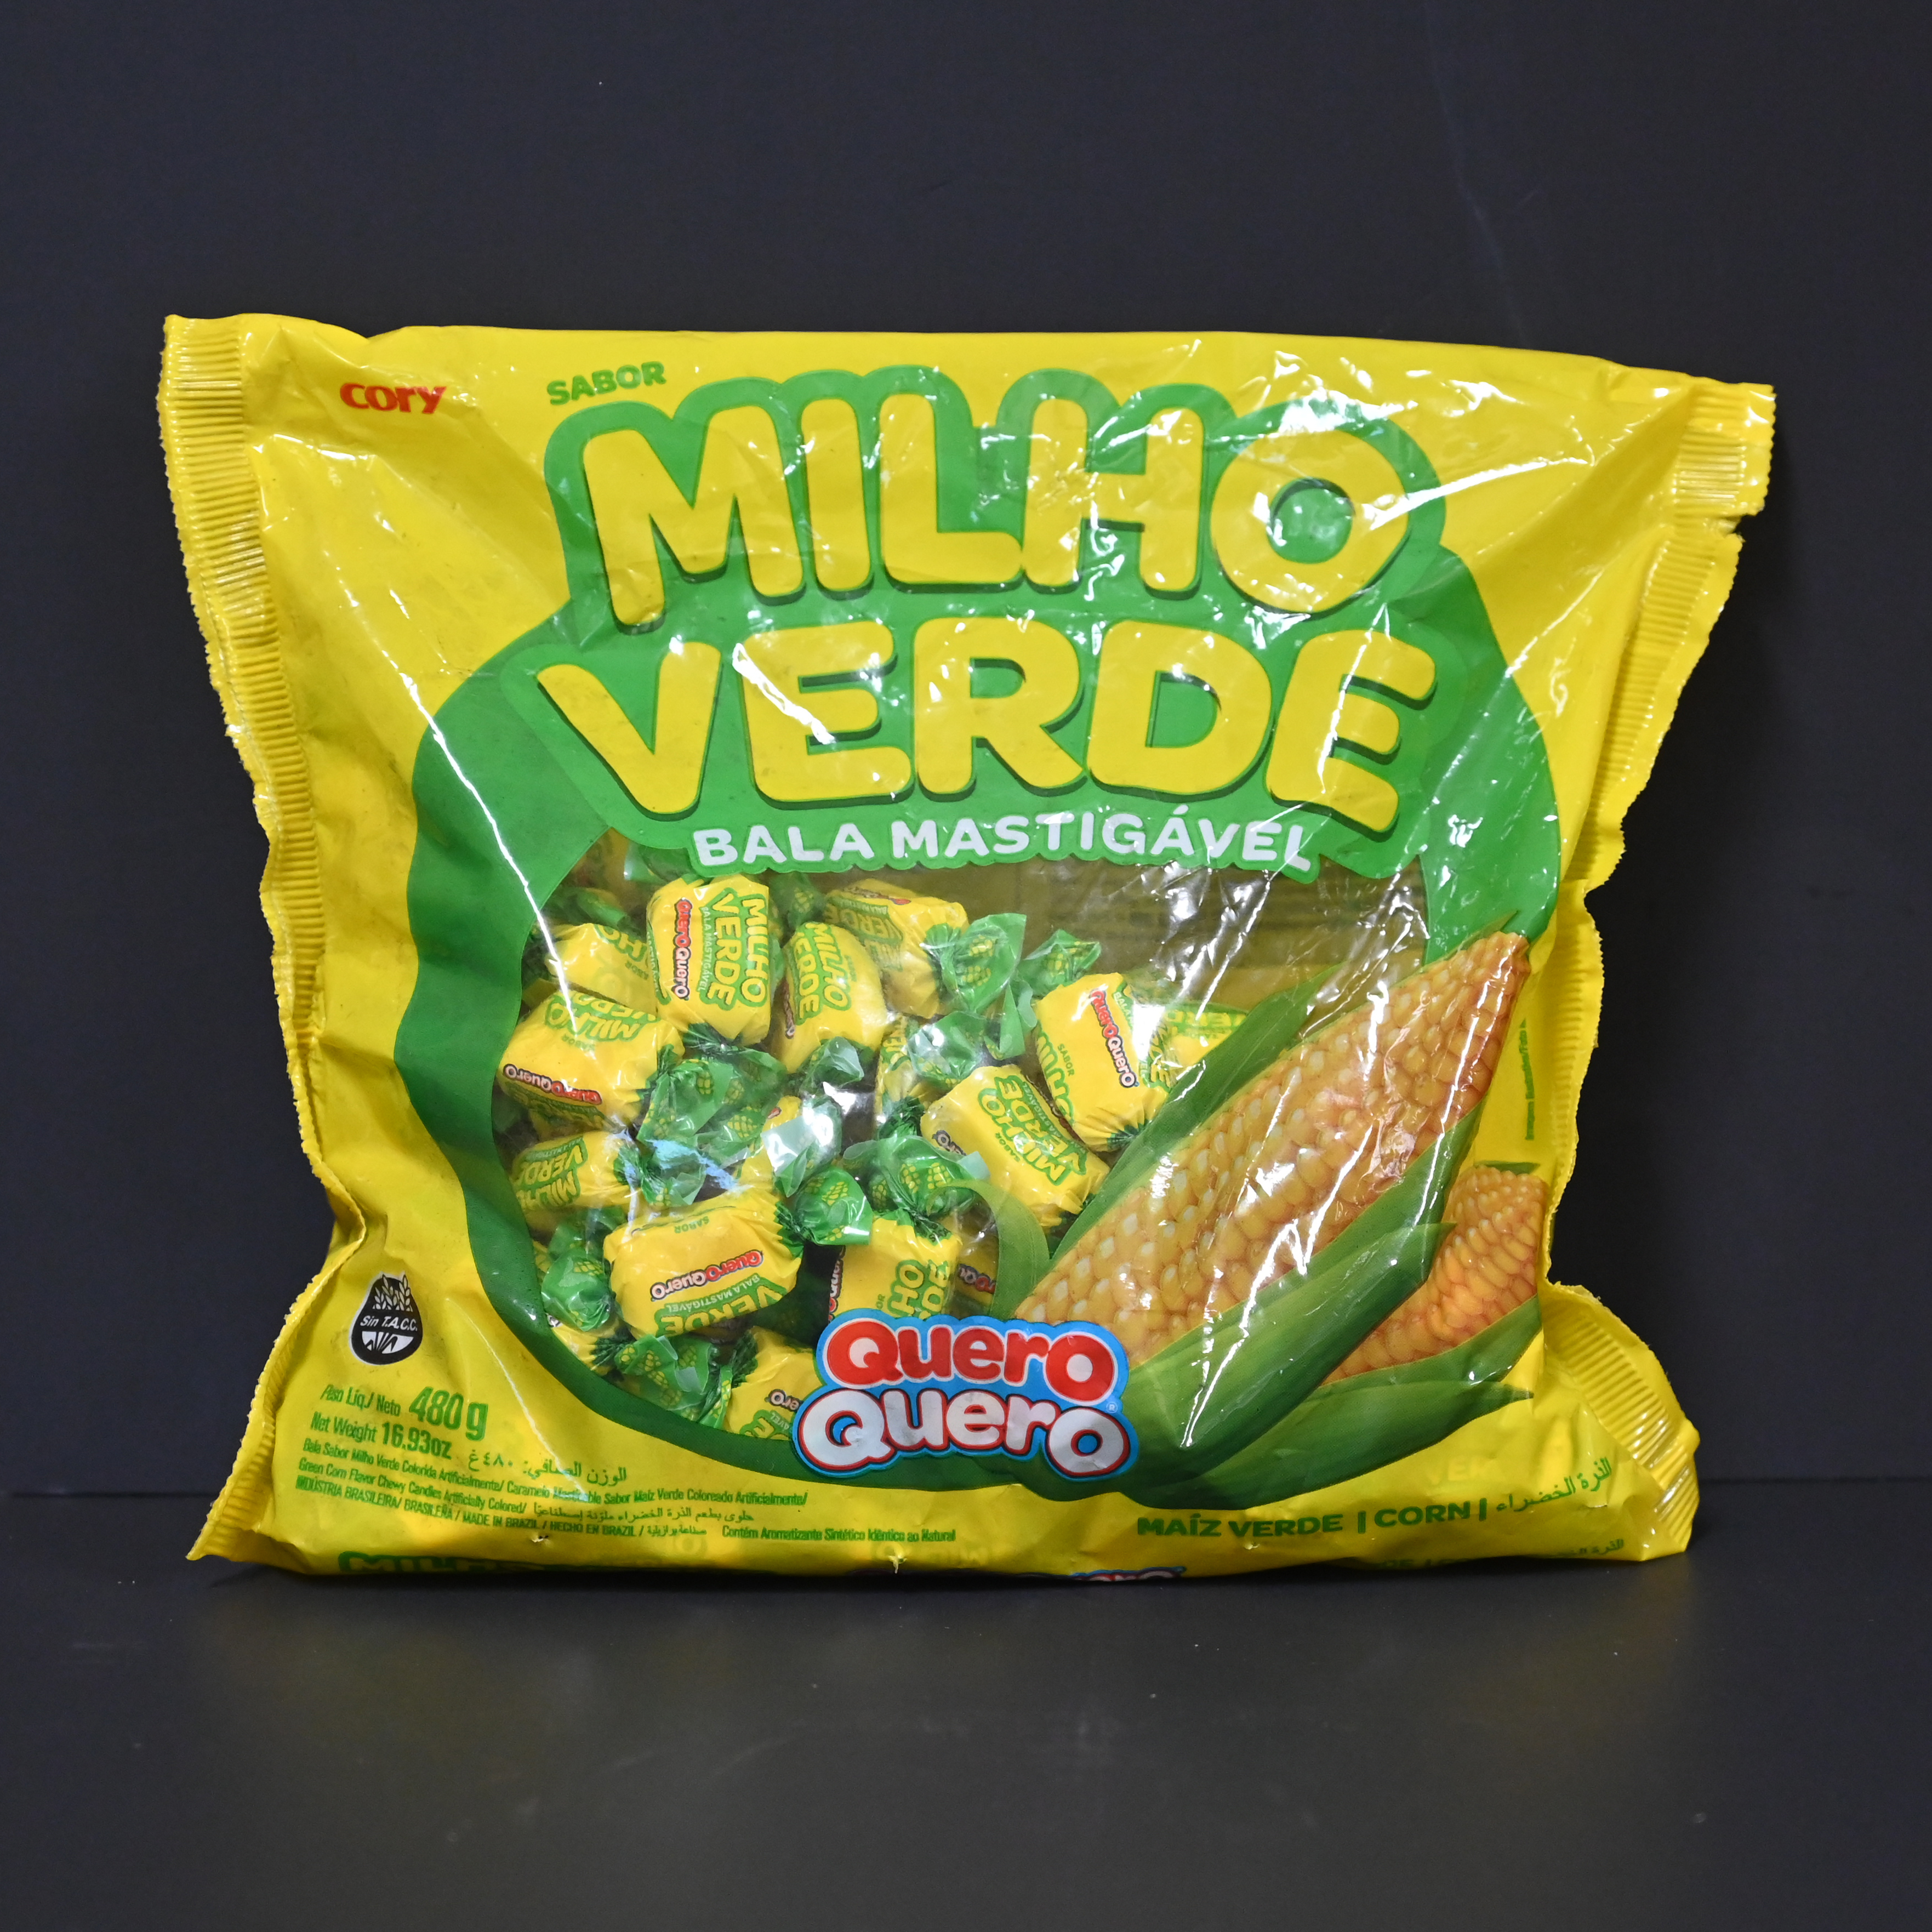 2087 24/500g Quero Chewy 
Candy
Maiz